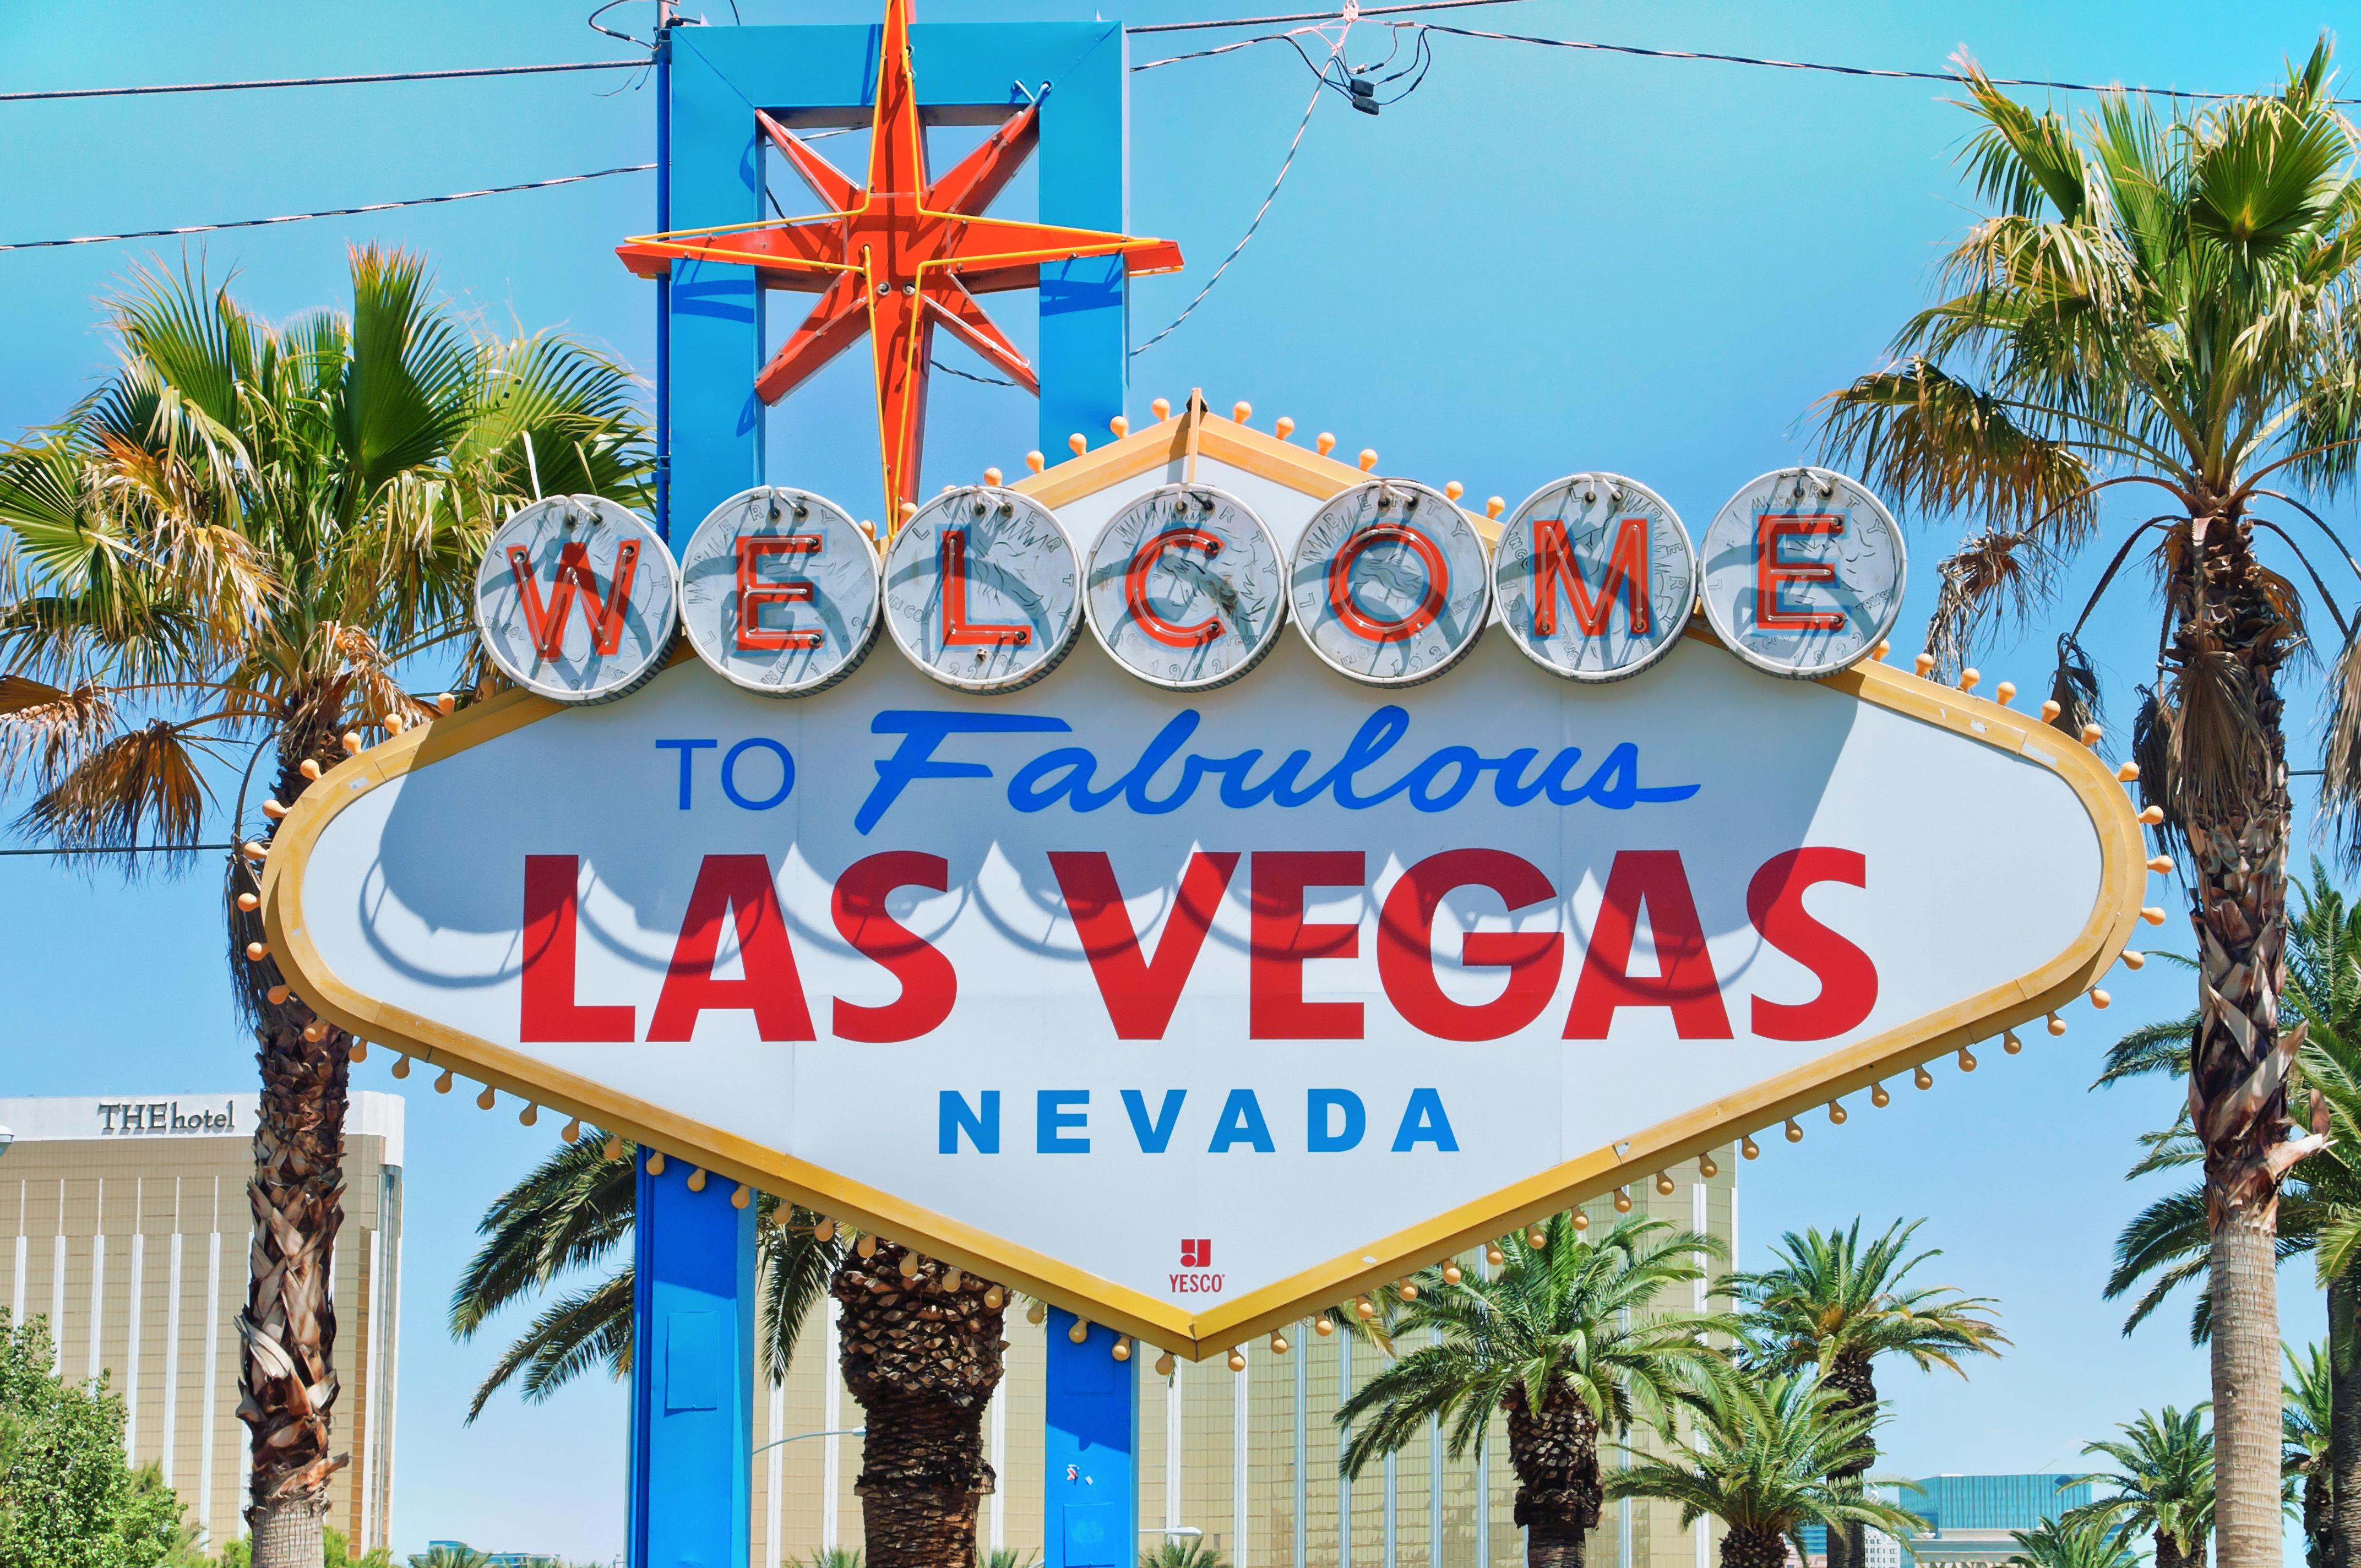 Welcome To Fabulous Las Vegasの看板のレビュー Welcome To Fabulous Las Vegasの看板のチケット Welcome To Fabulous Las Vegasの看板の割引 Welcome To Fabulous Las Vegasの看板の交通機関 所在地 営業時間 Welcome To Fabulous Las Vegasの看板周辺の観光